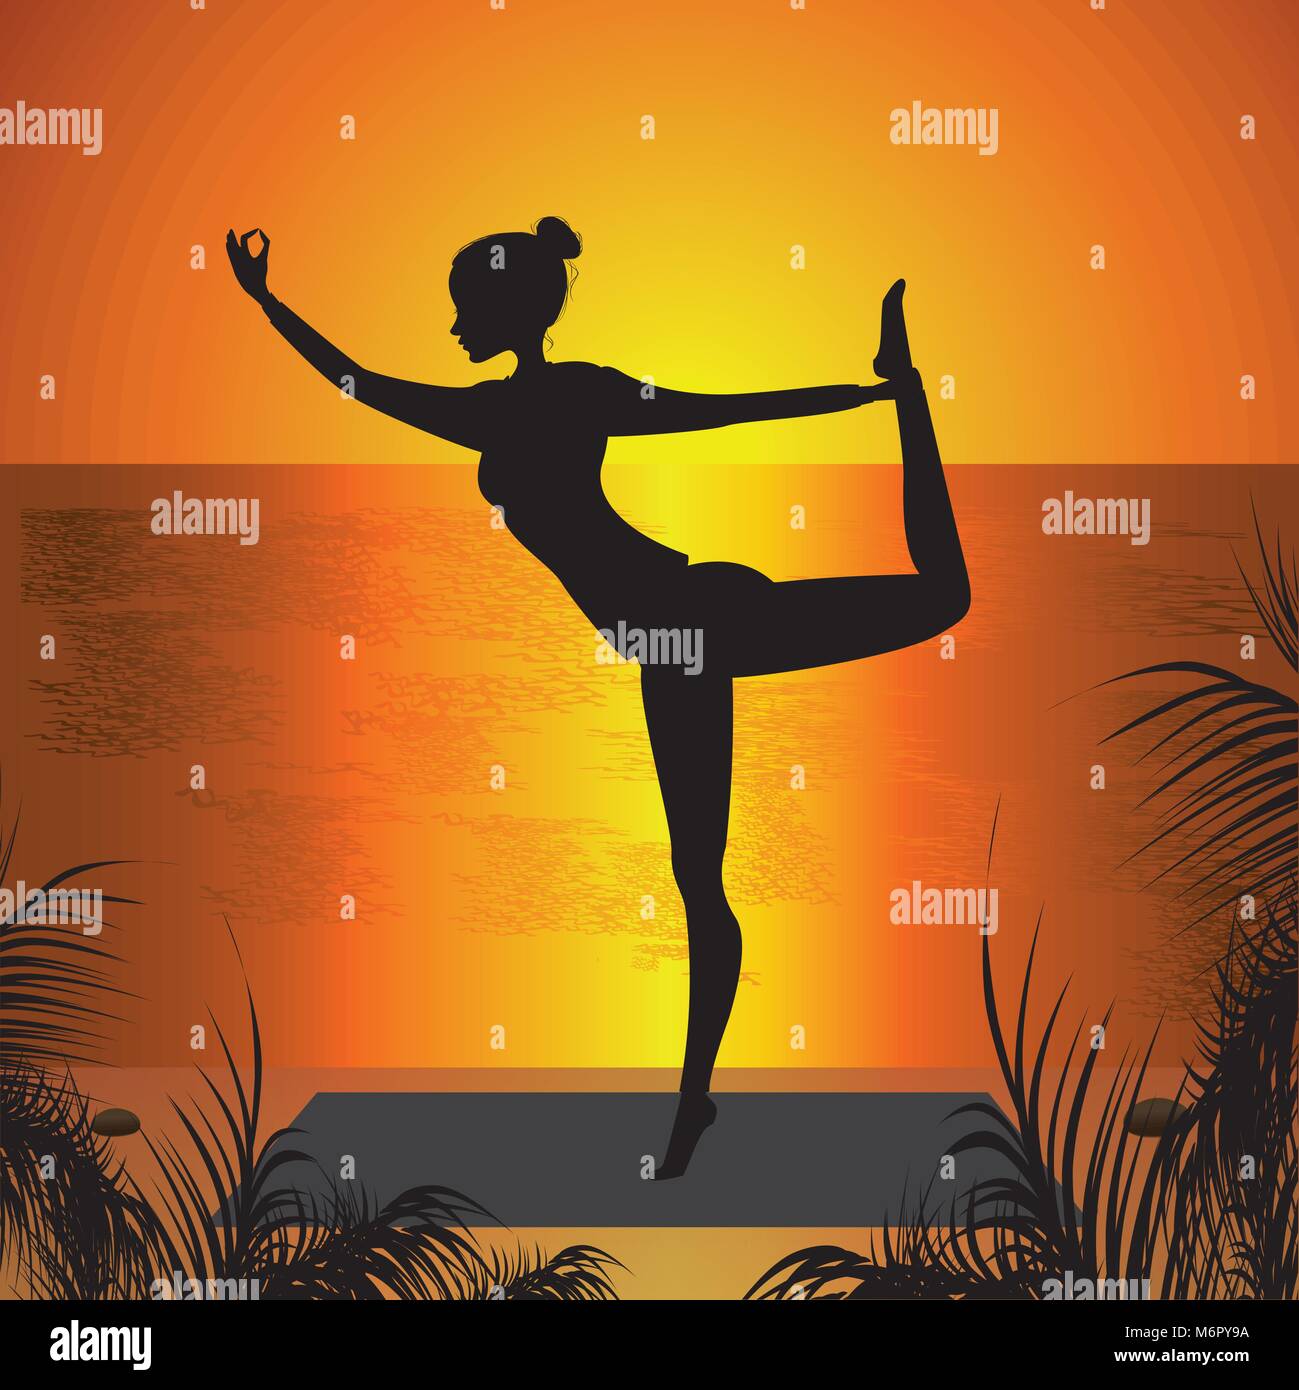 Woman practicing yoga on the sunset background, stock vector illustration Illustration de Vecteur